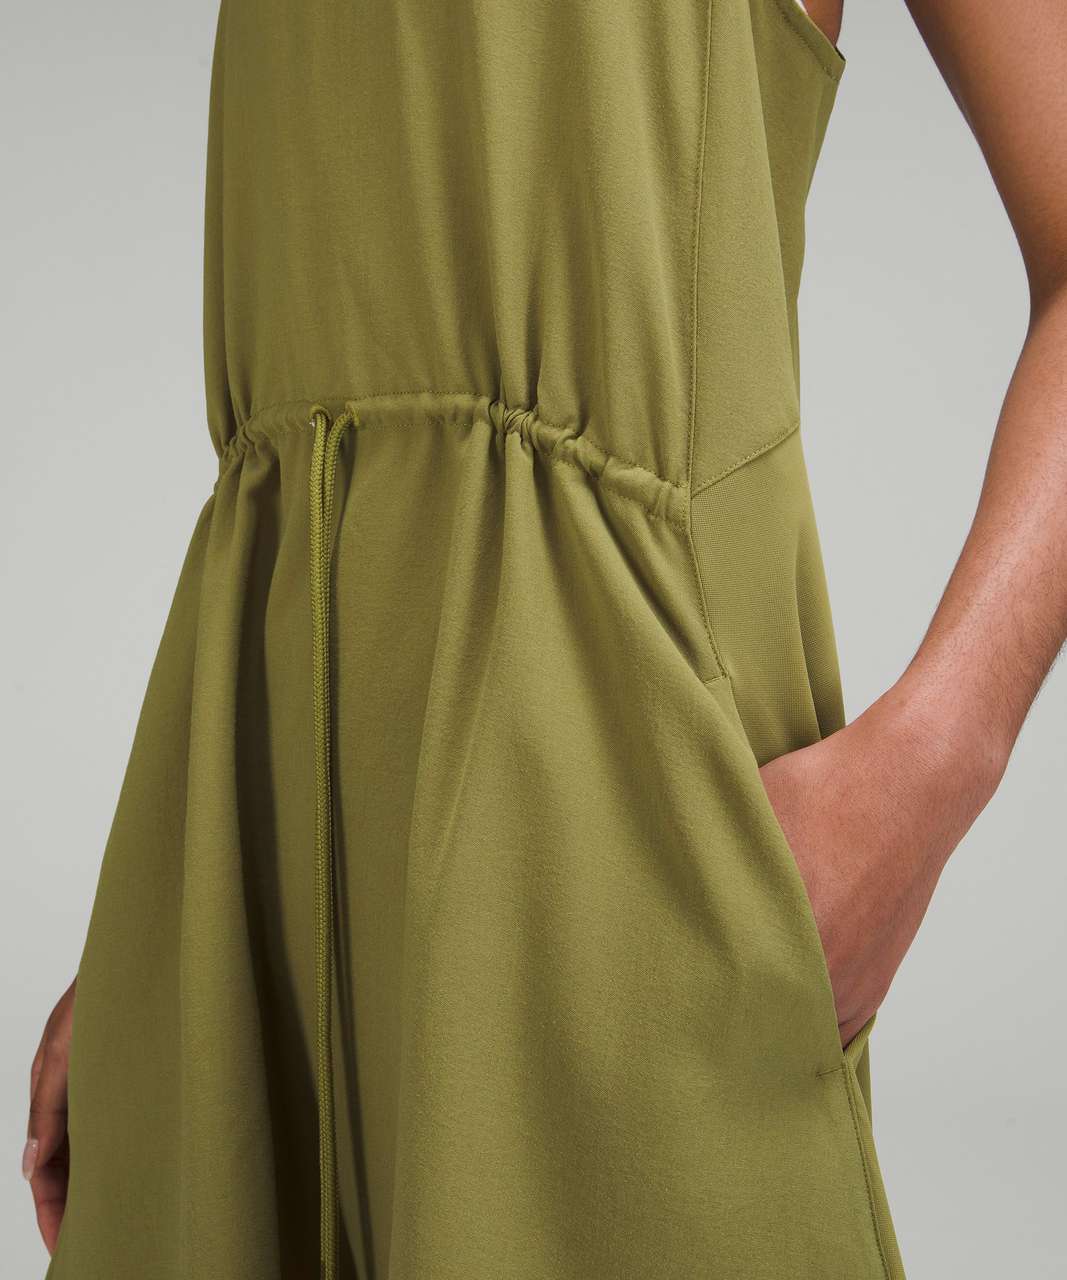 Lululemon Mesh Overlay High-Neck Dress - Bronze Green